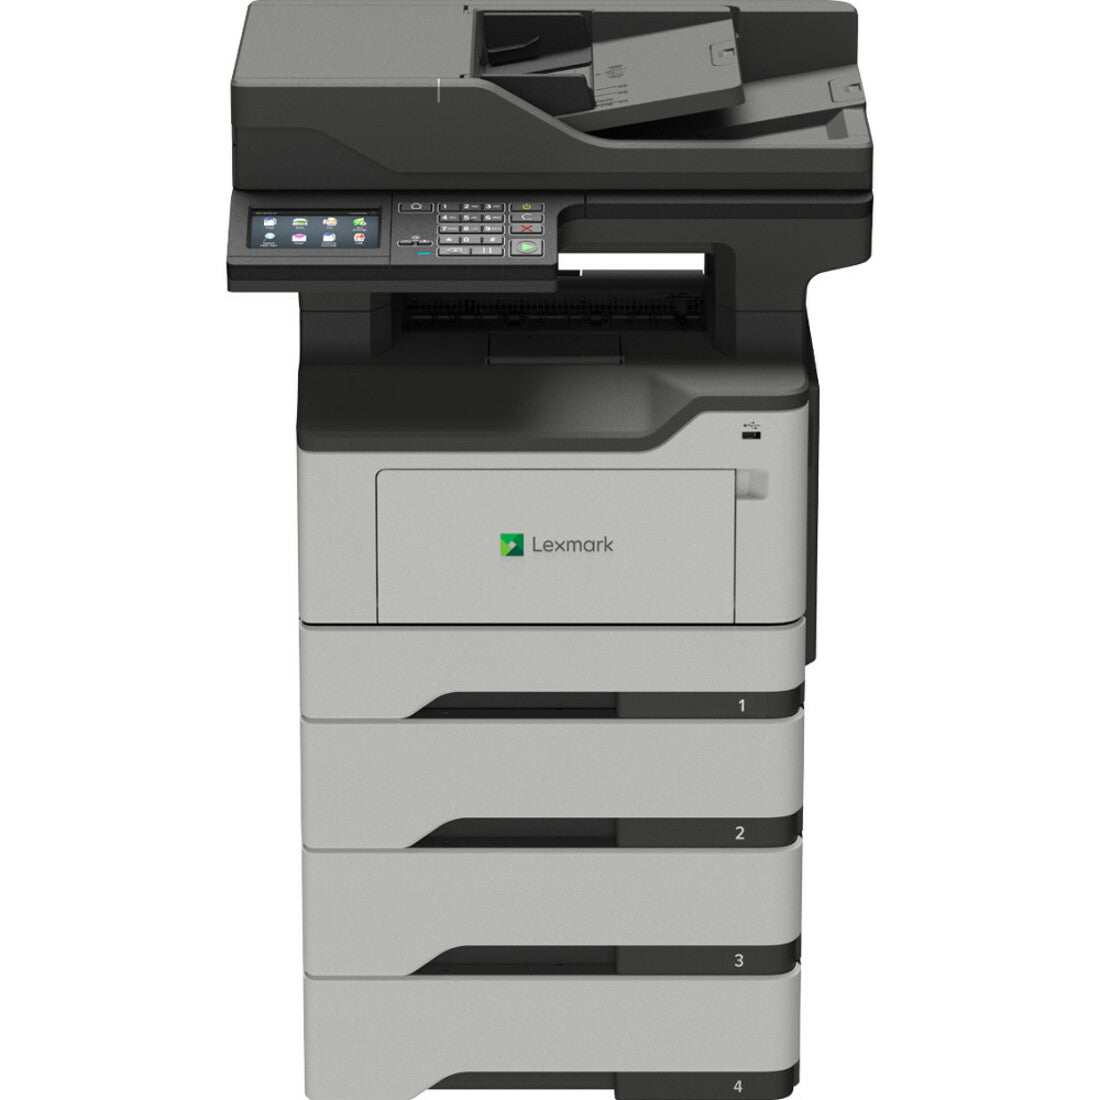 Lexmark 36S0840 MX522adhe Multifunction Monochrome Laser Printer, Automatic Duplex Printing, 46 ppm, 1200 x 1200 dpi